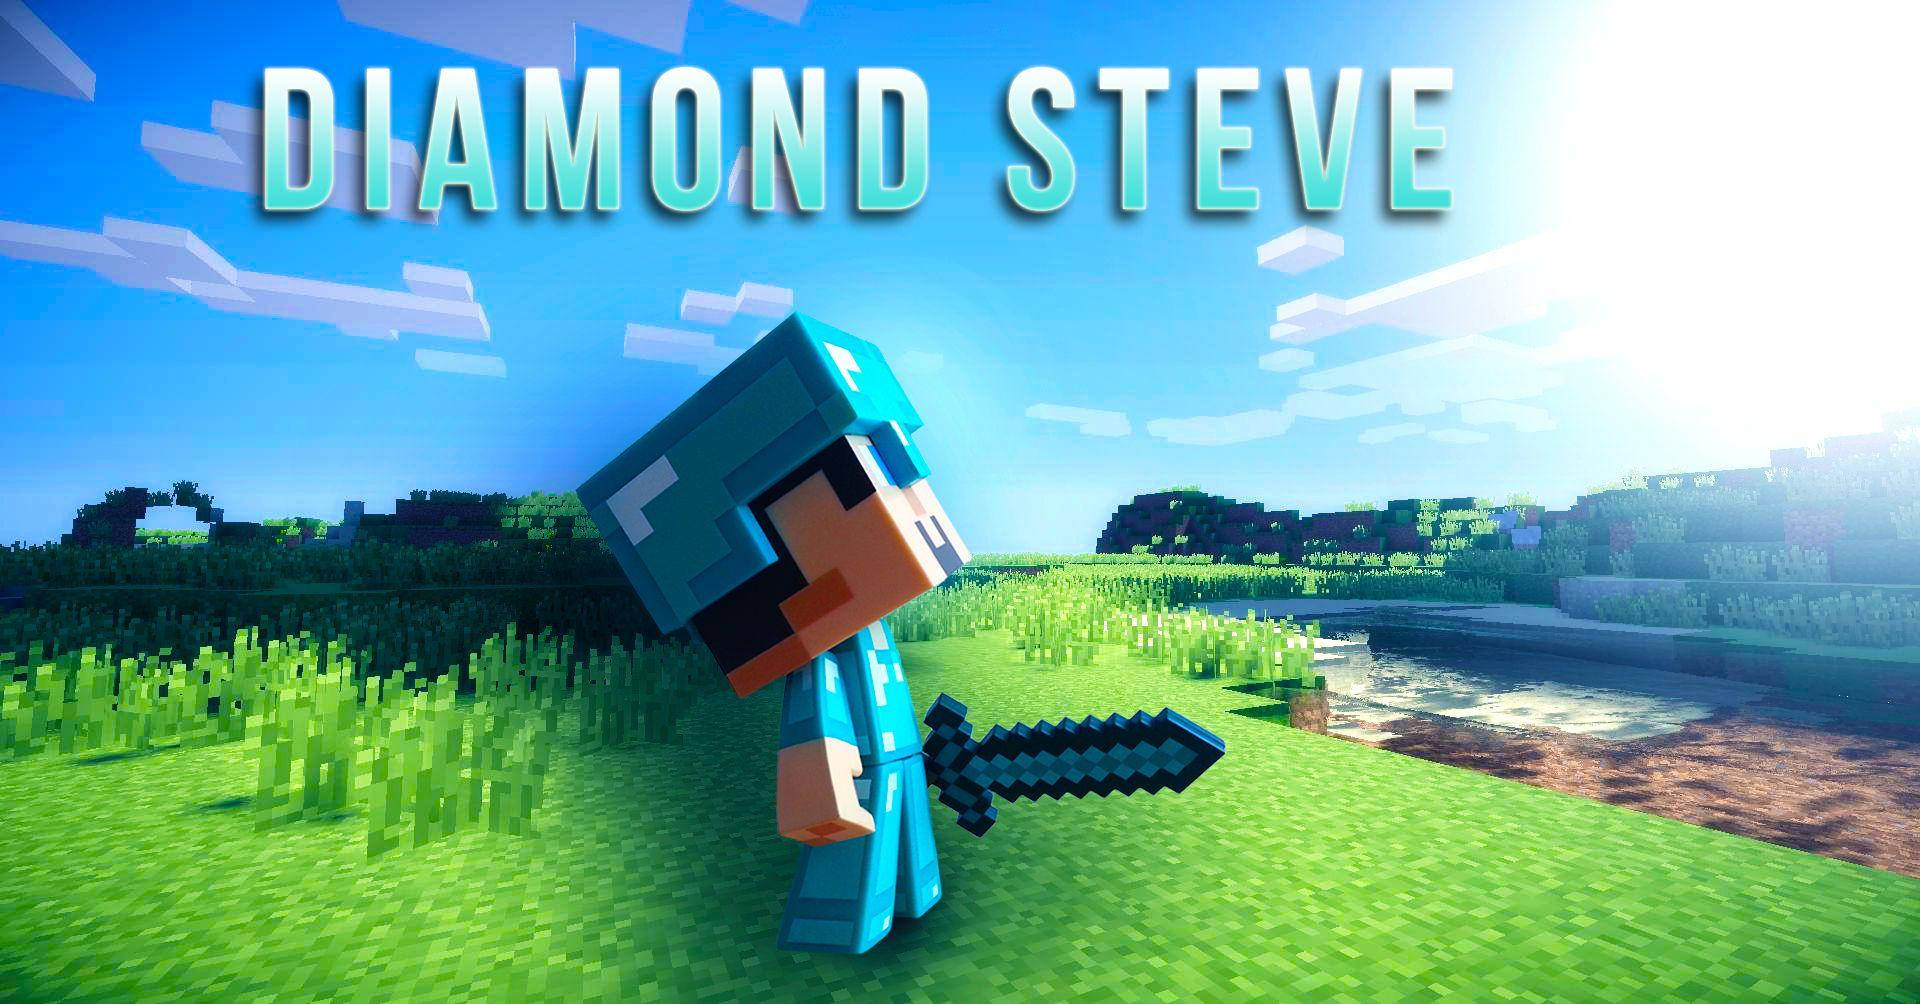 Diamant Steve Cool Minecraft Wallpaper